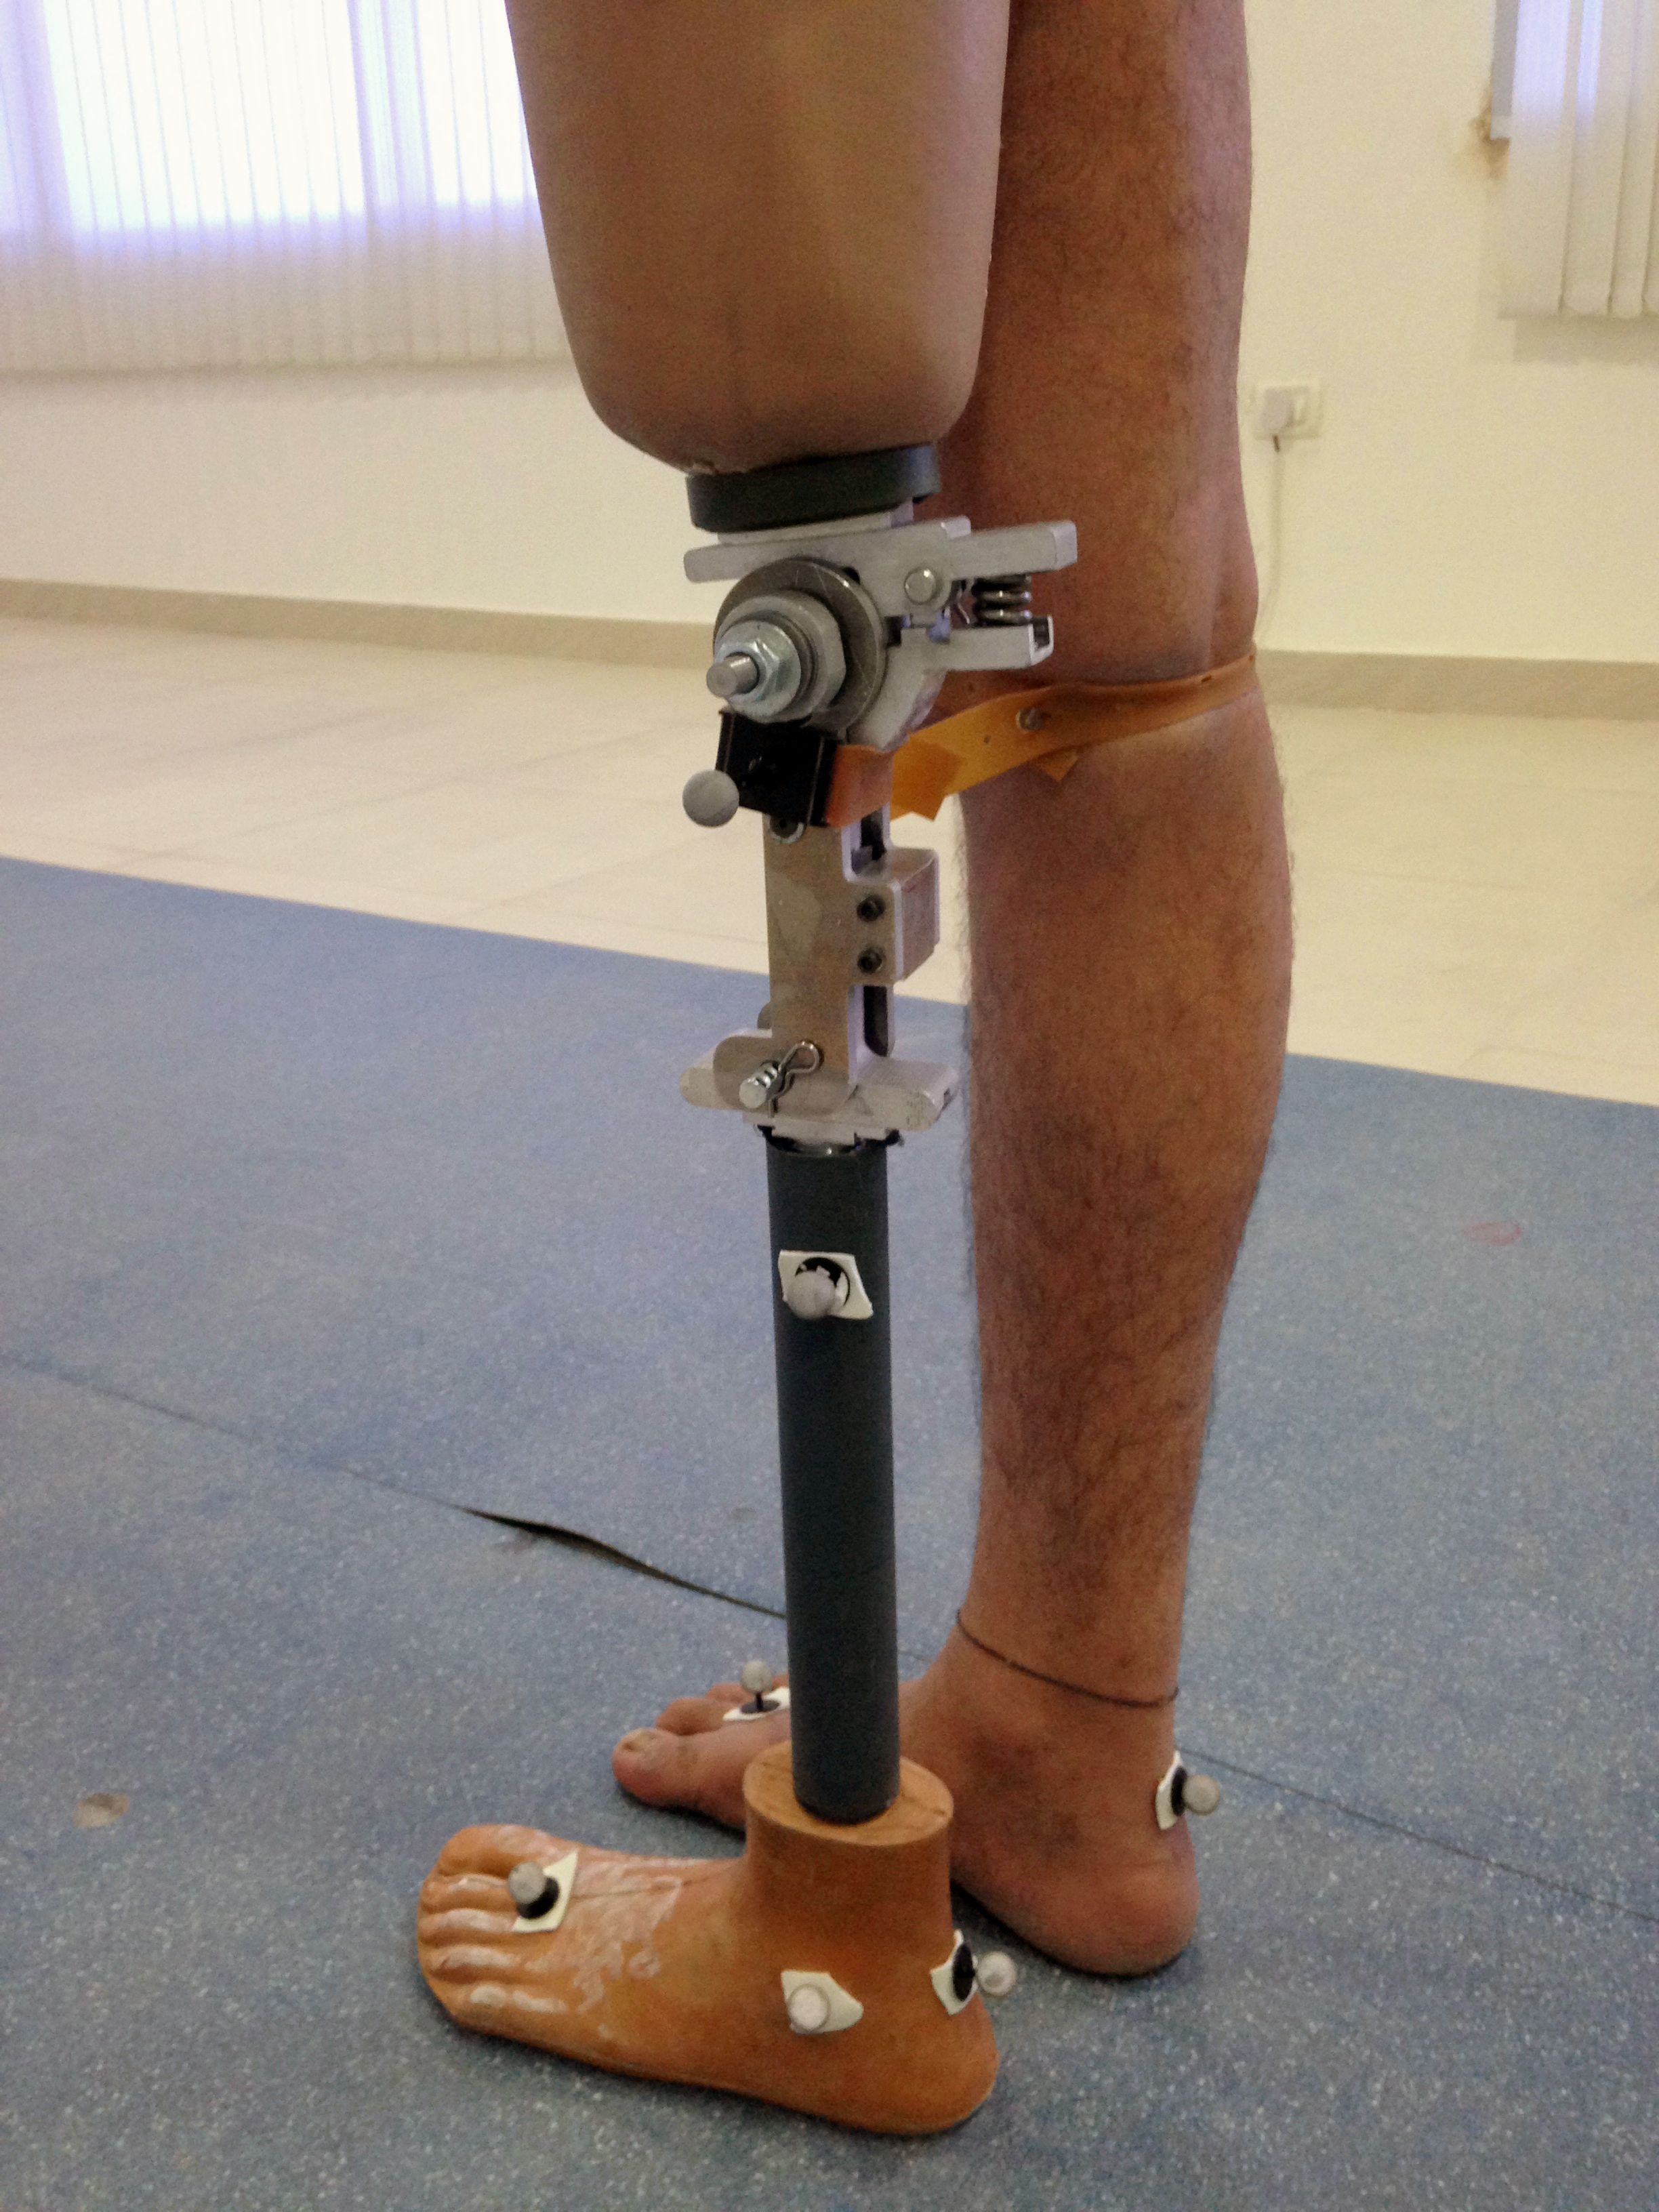 Very hig above knee amputation  Prosthetic leg, Prosthetics, Knee